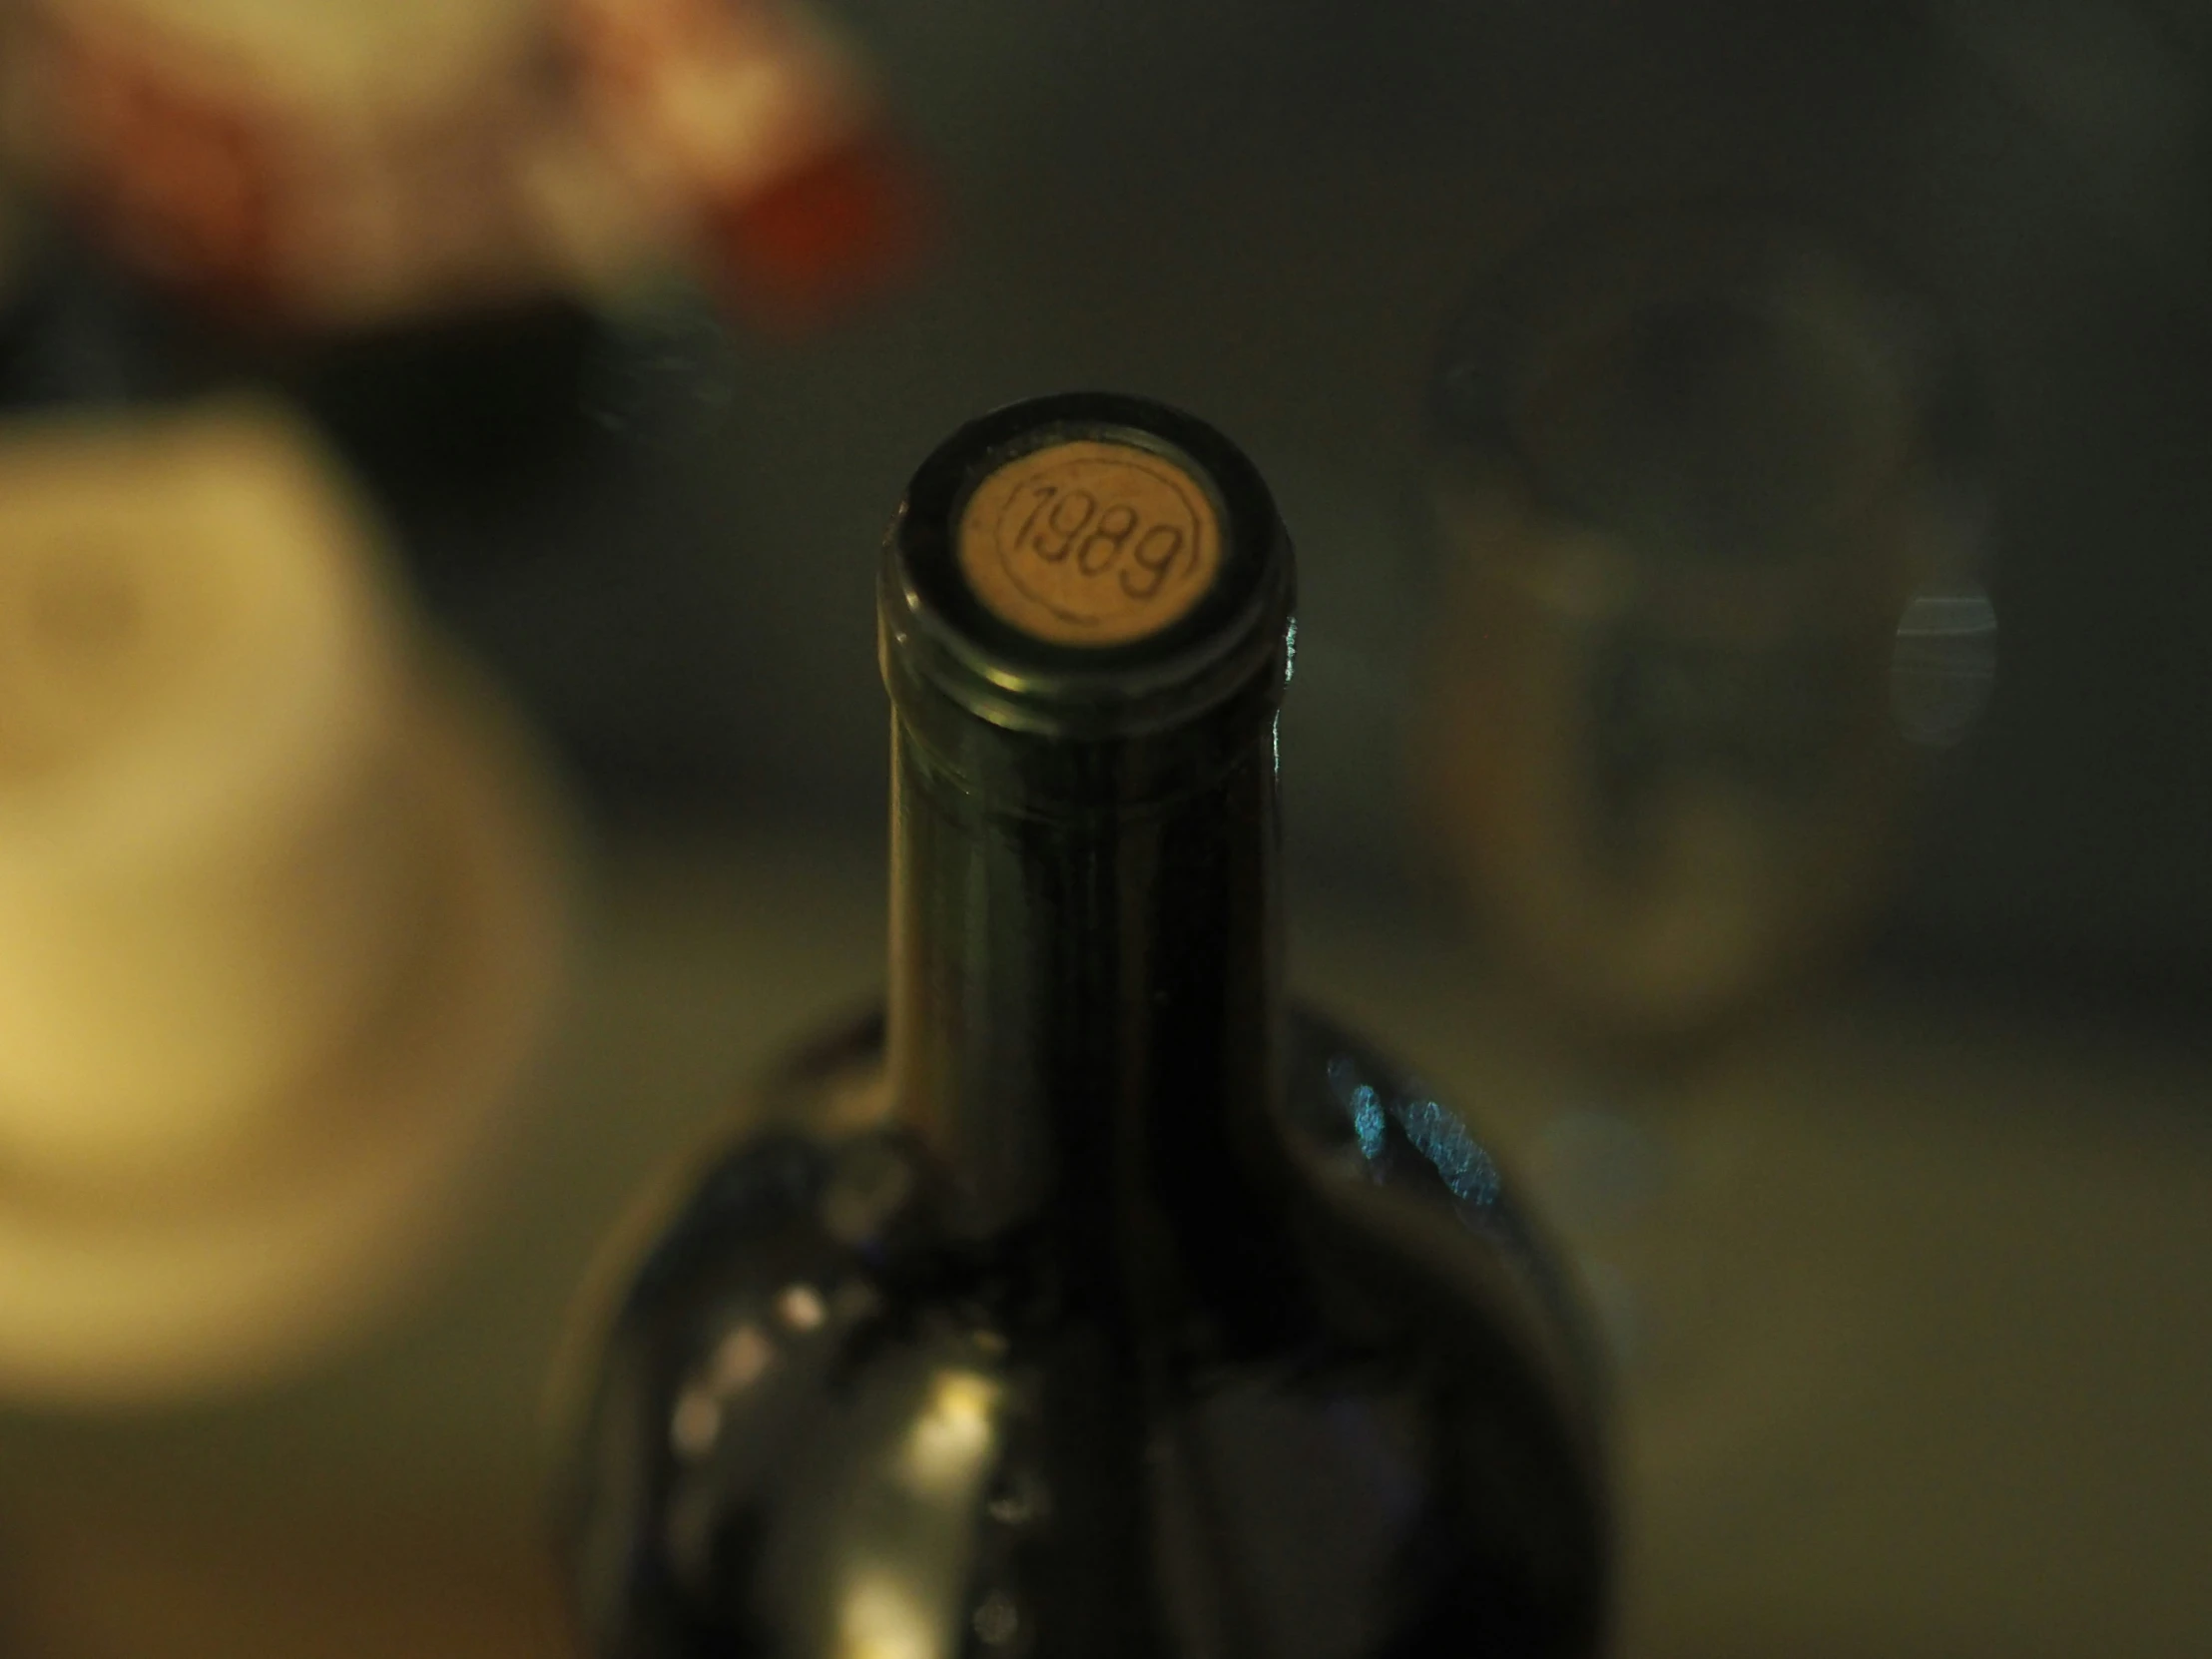 the black bottle has an old cork stopper